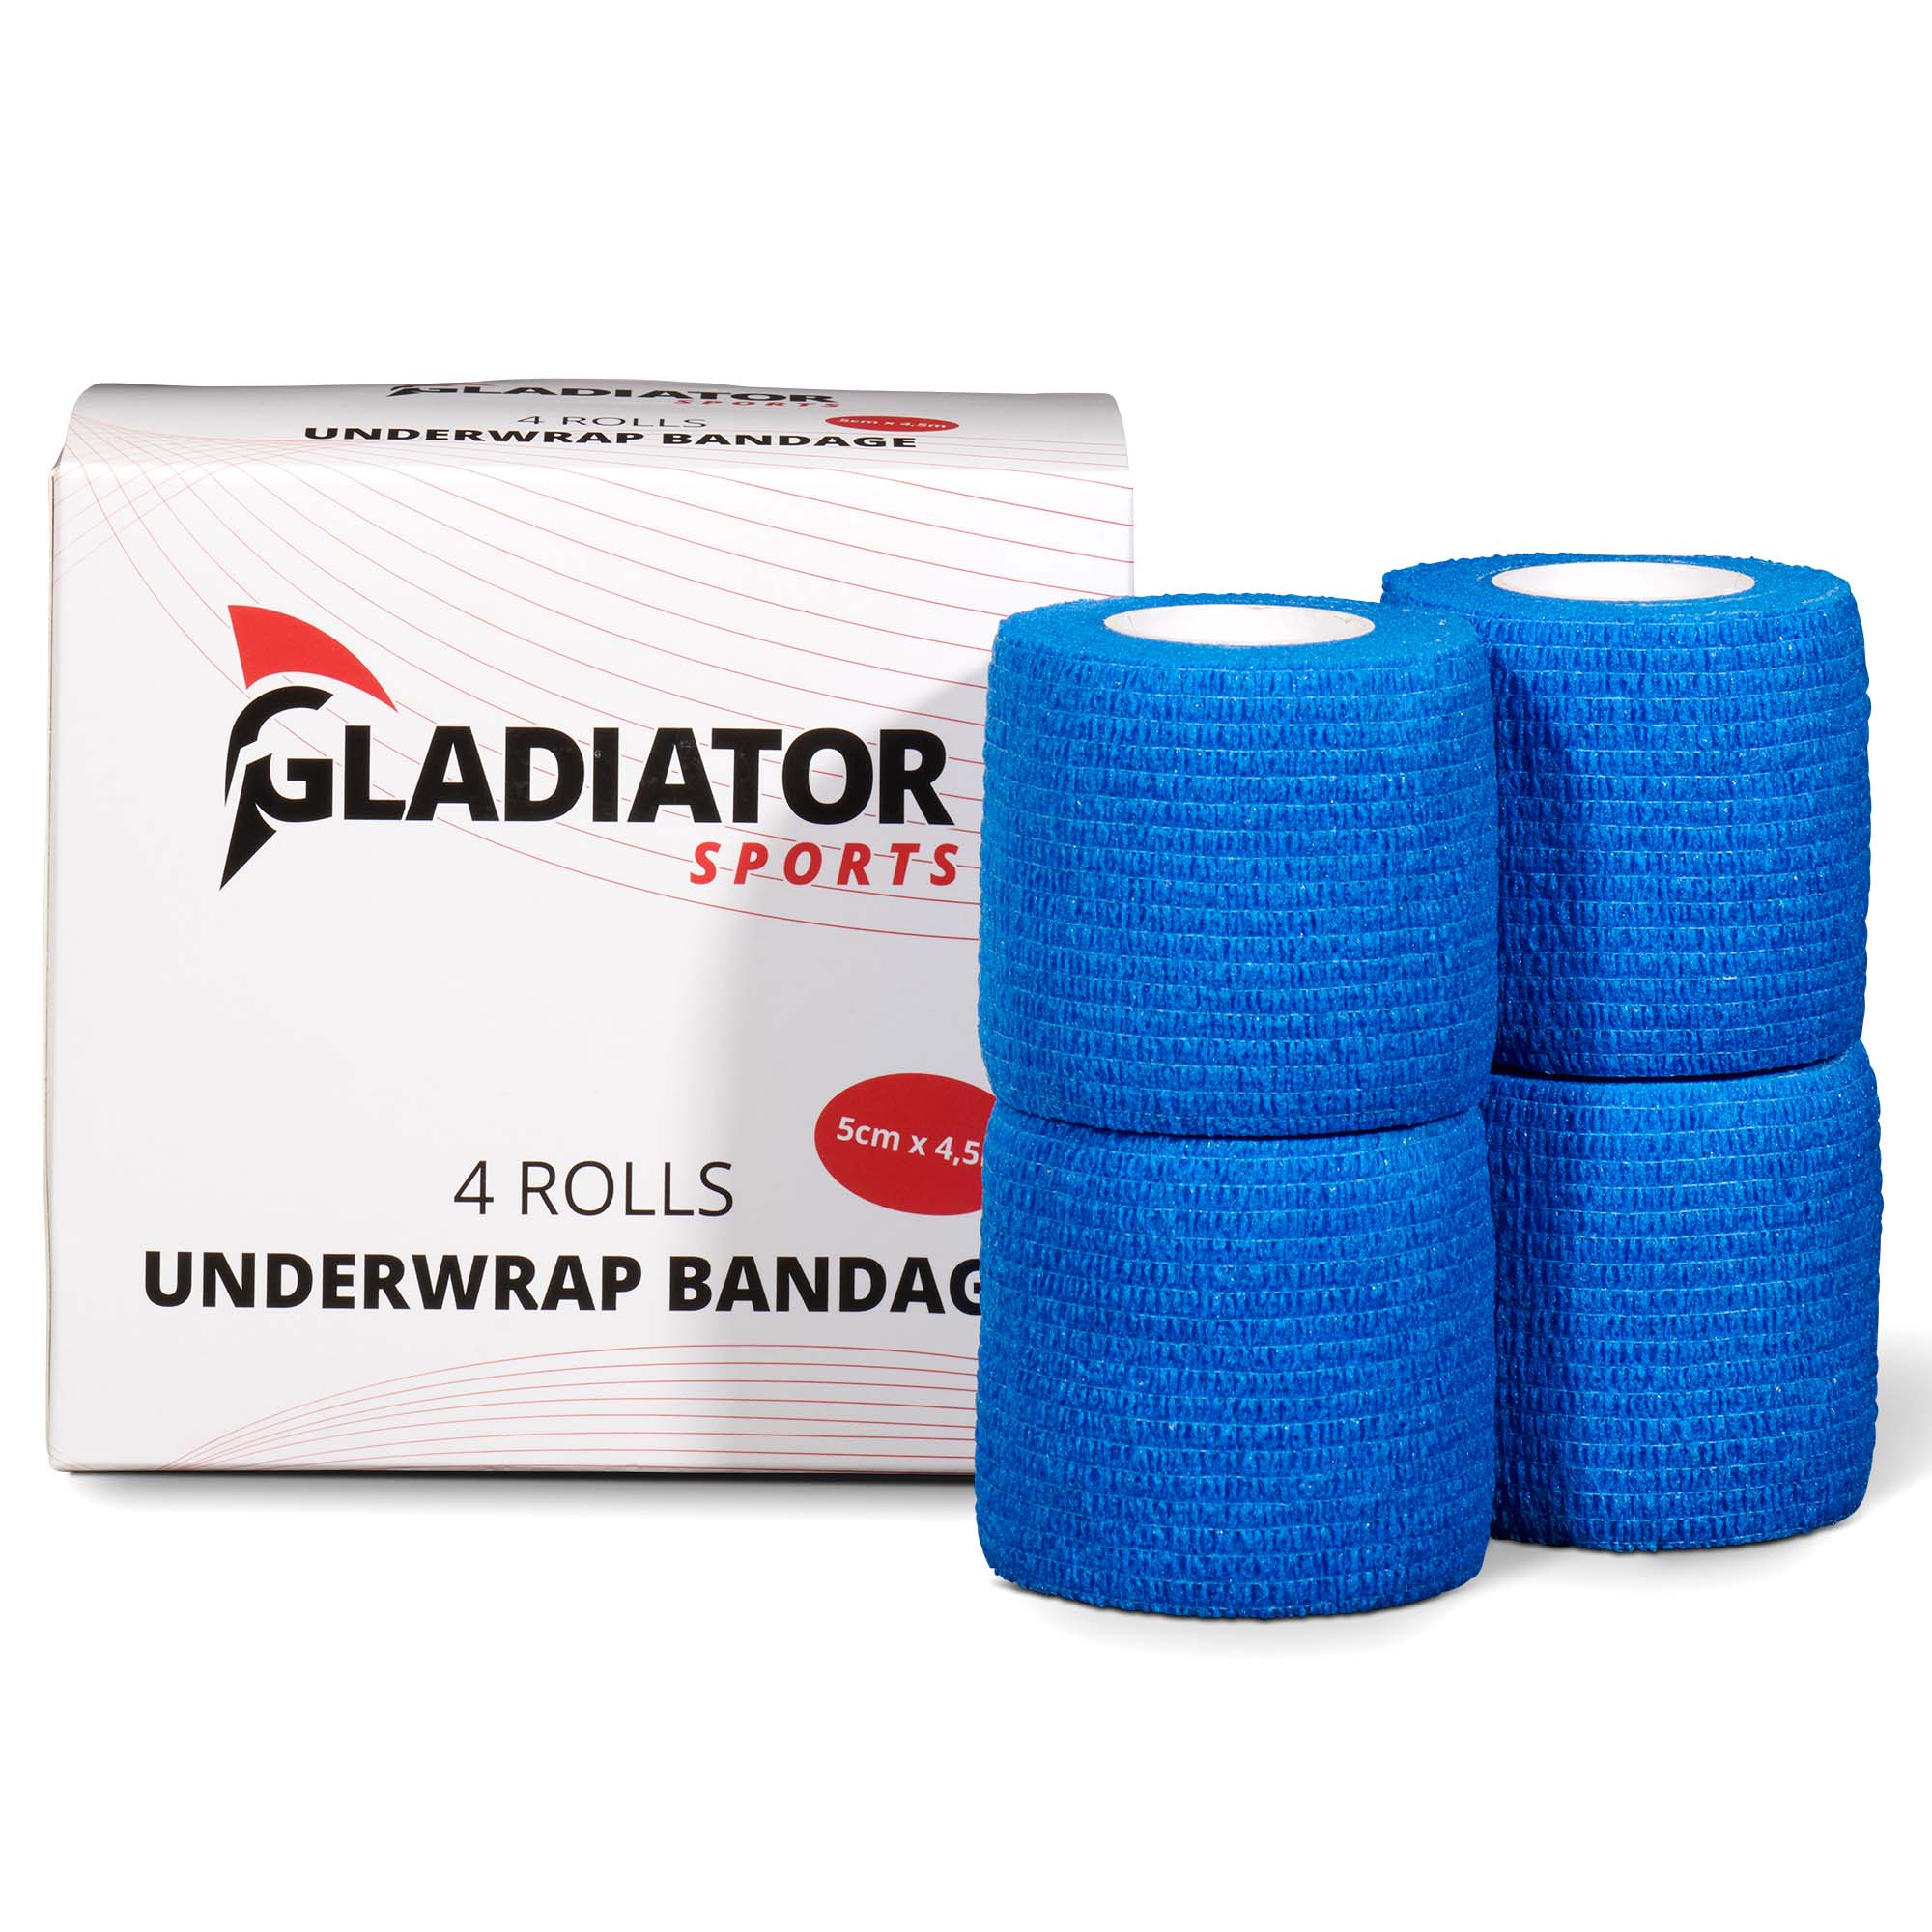 Gladiator Sports underwrap bandage 4 rolls with box blue